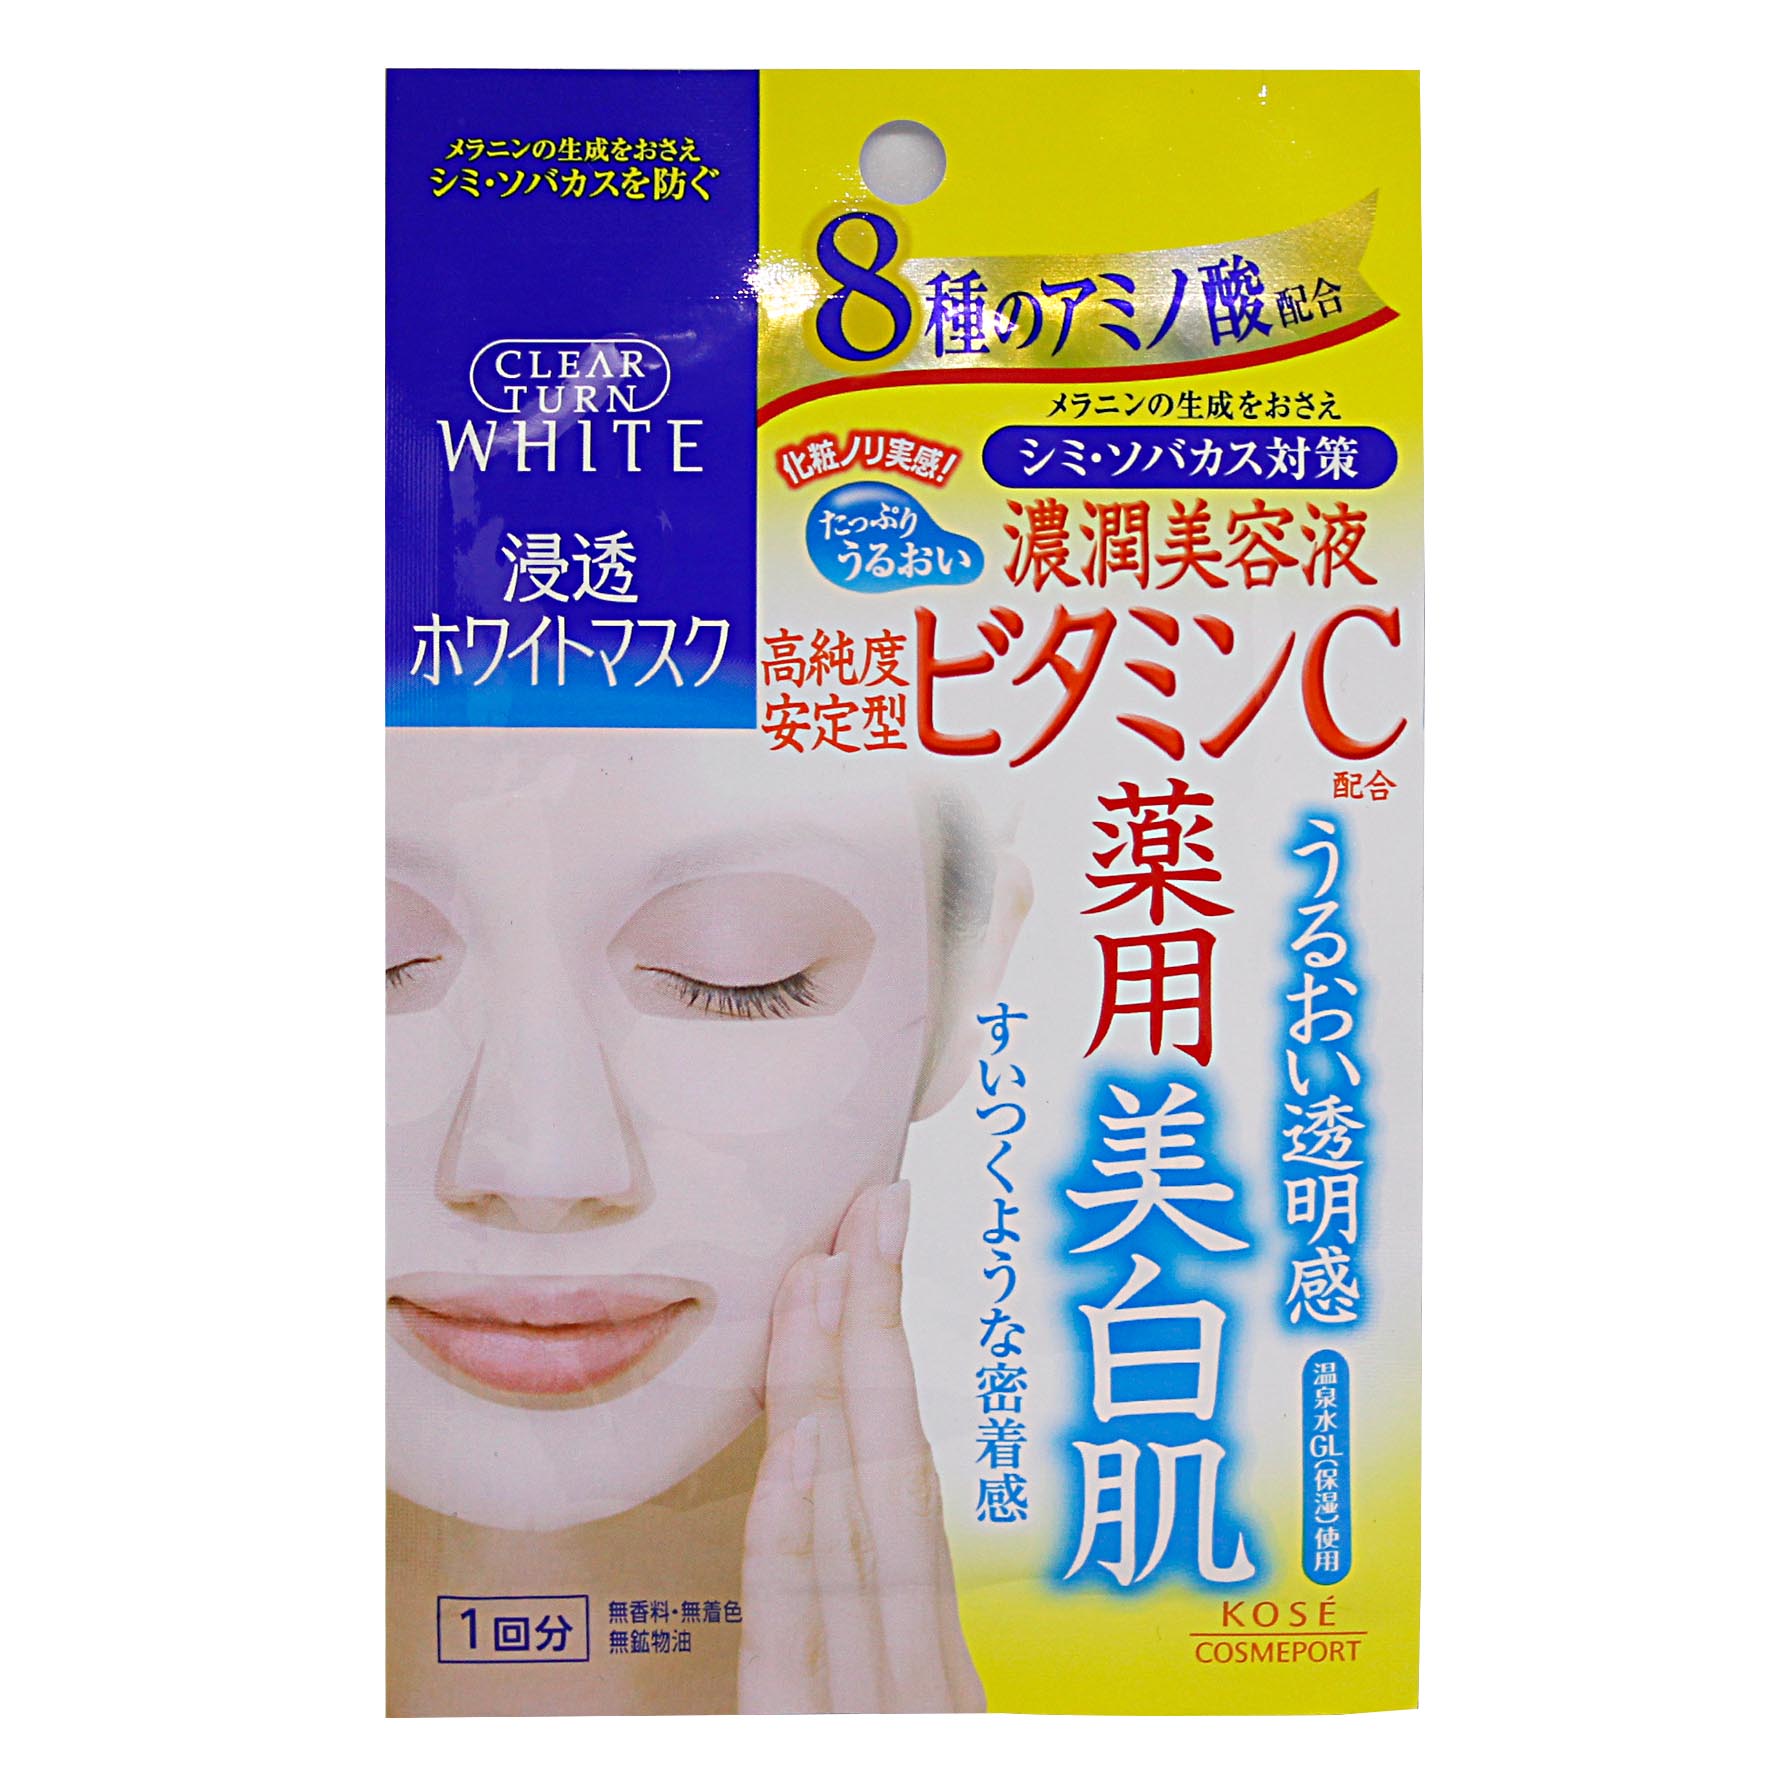 kose-clear-turn-white-mask-vitamin-c-1-sheets-buy1-get1-14-1609227149.jpg